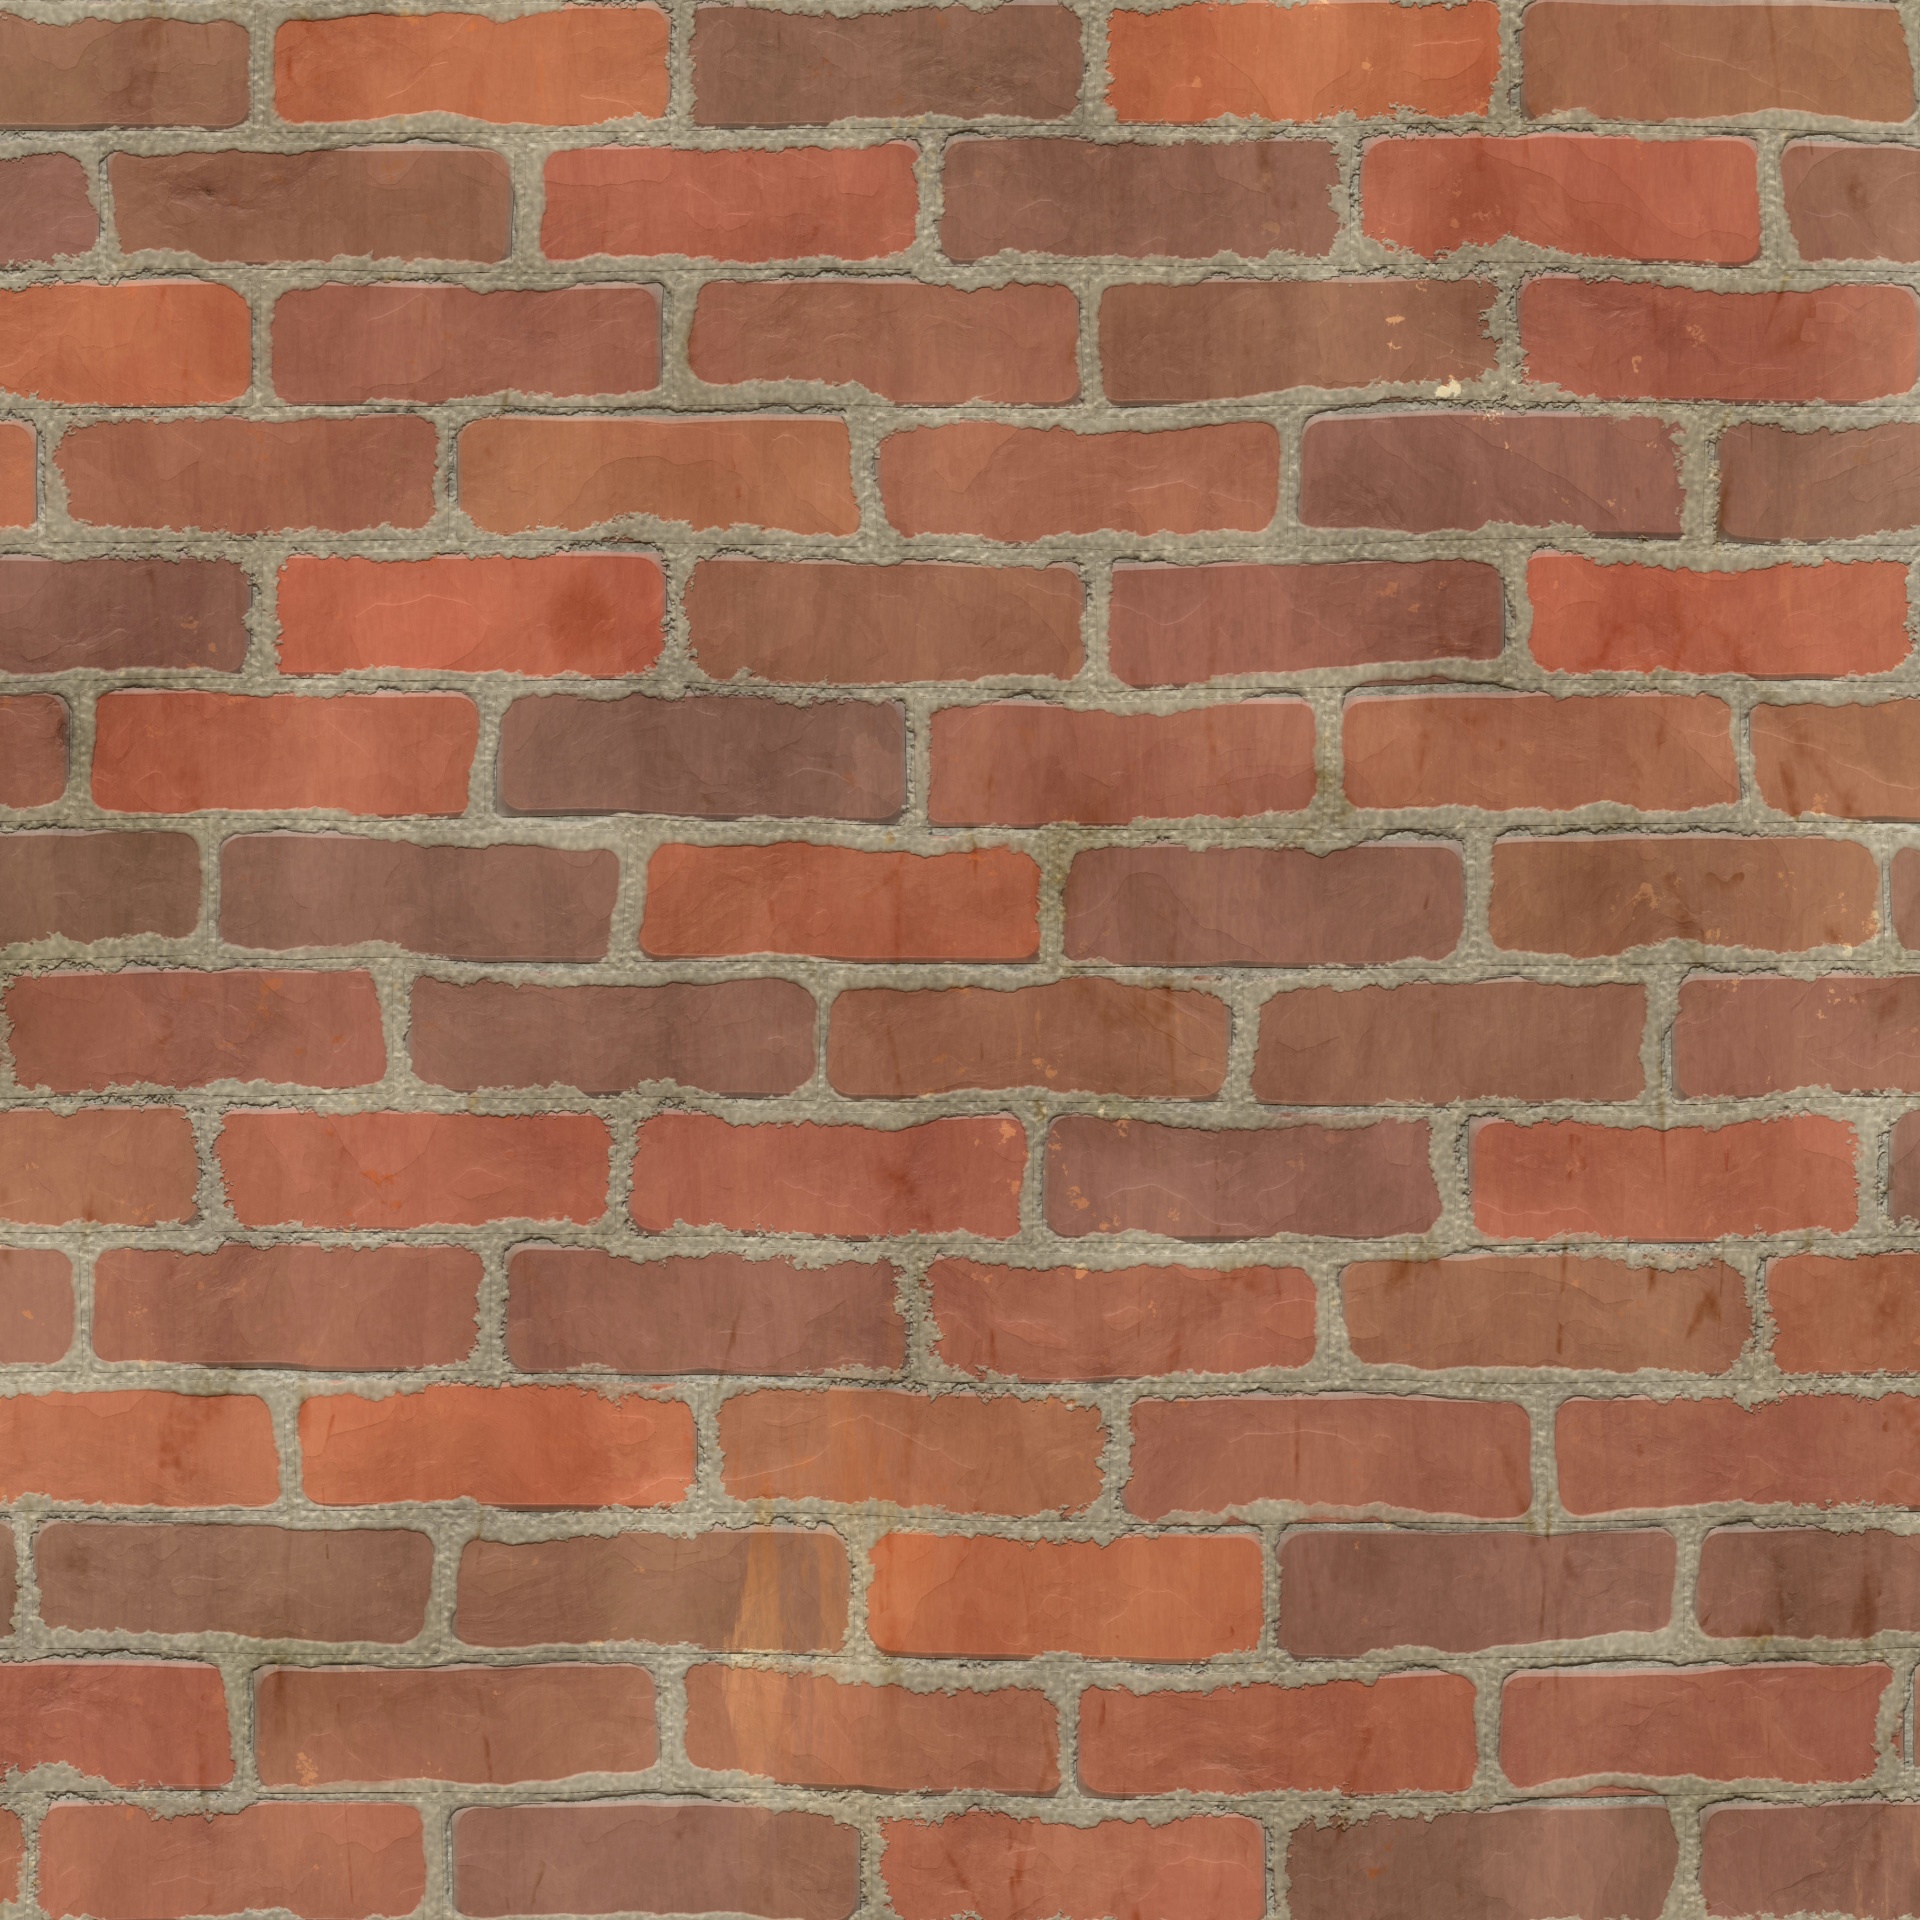 Brick Texture # 2